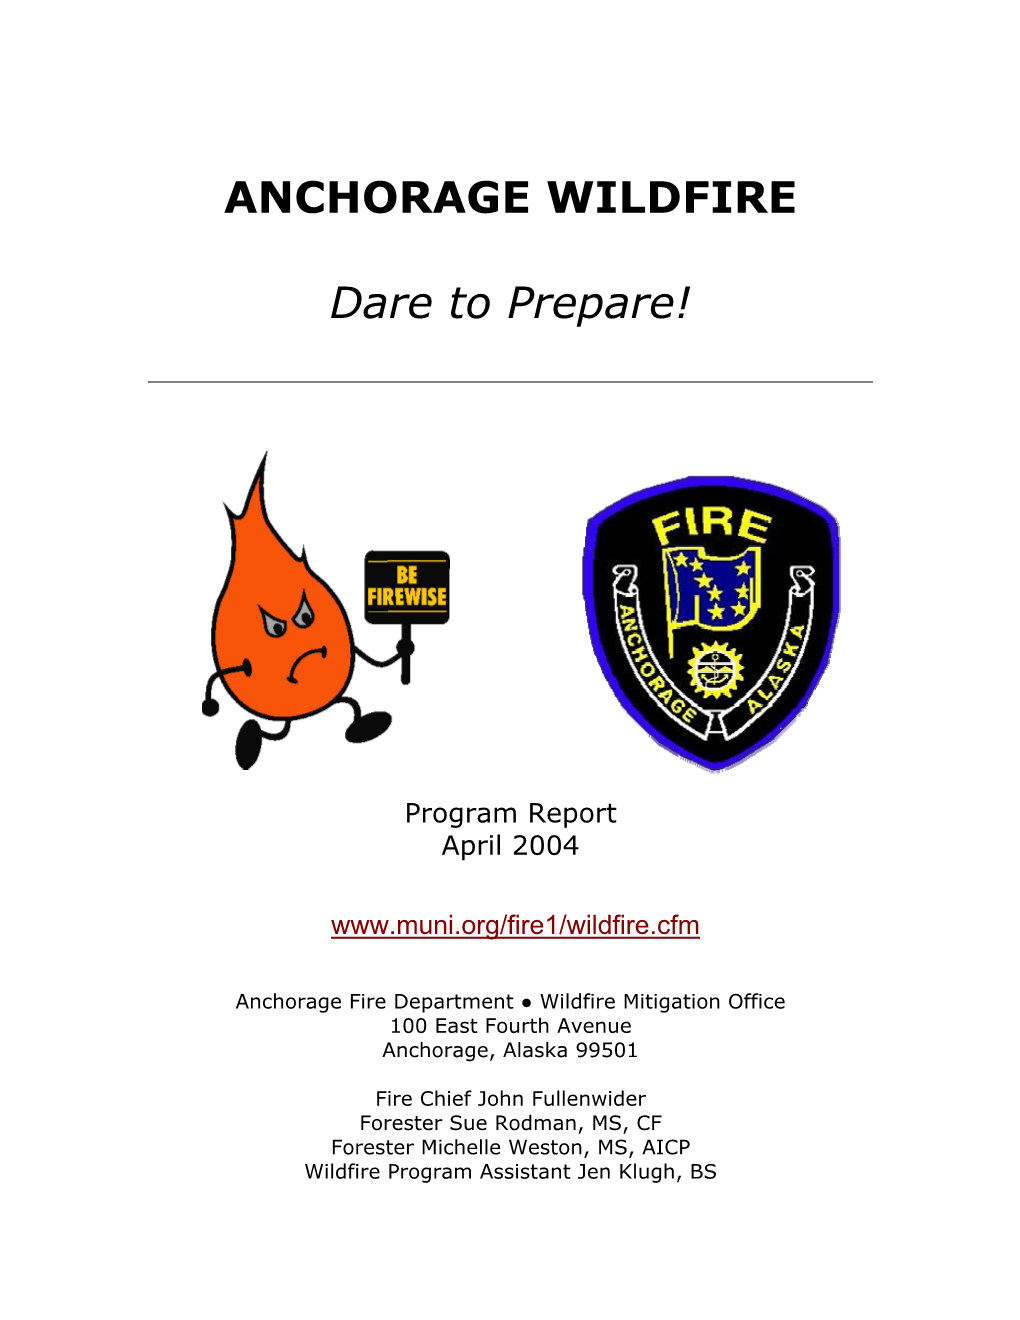 Anchorage Wildfire